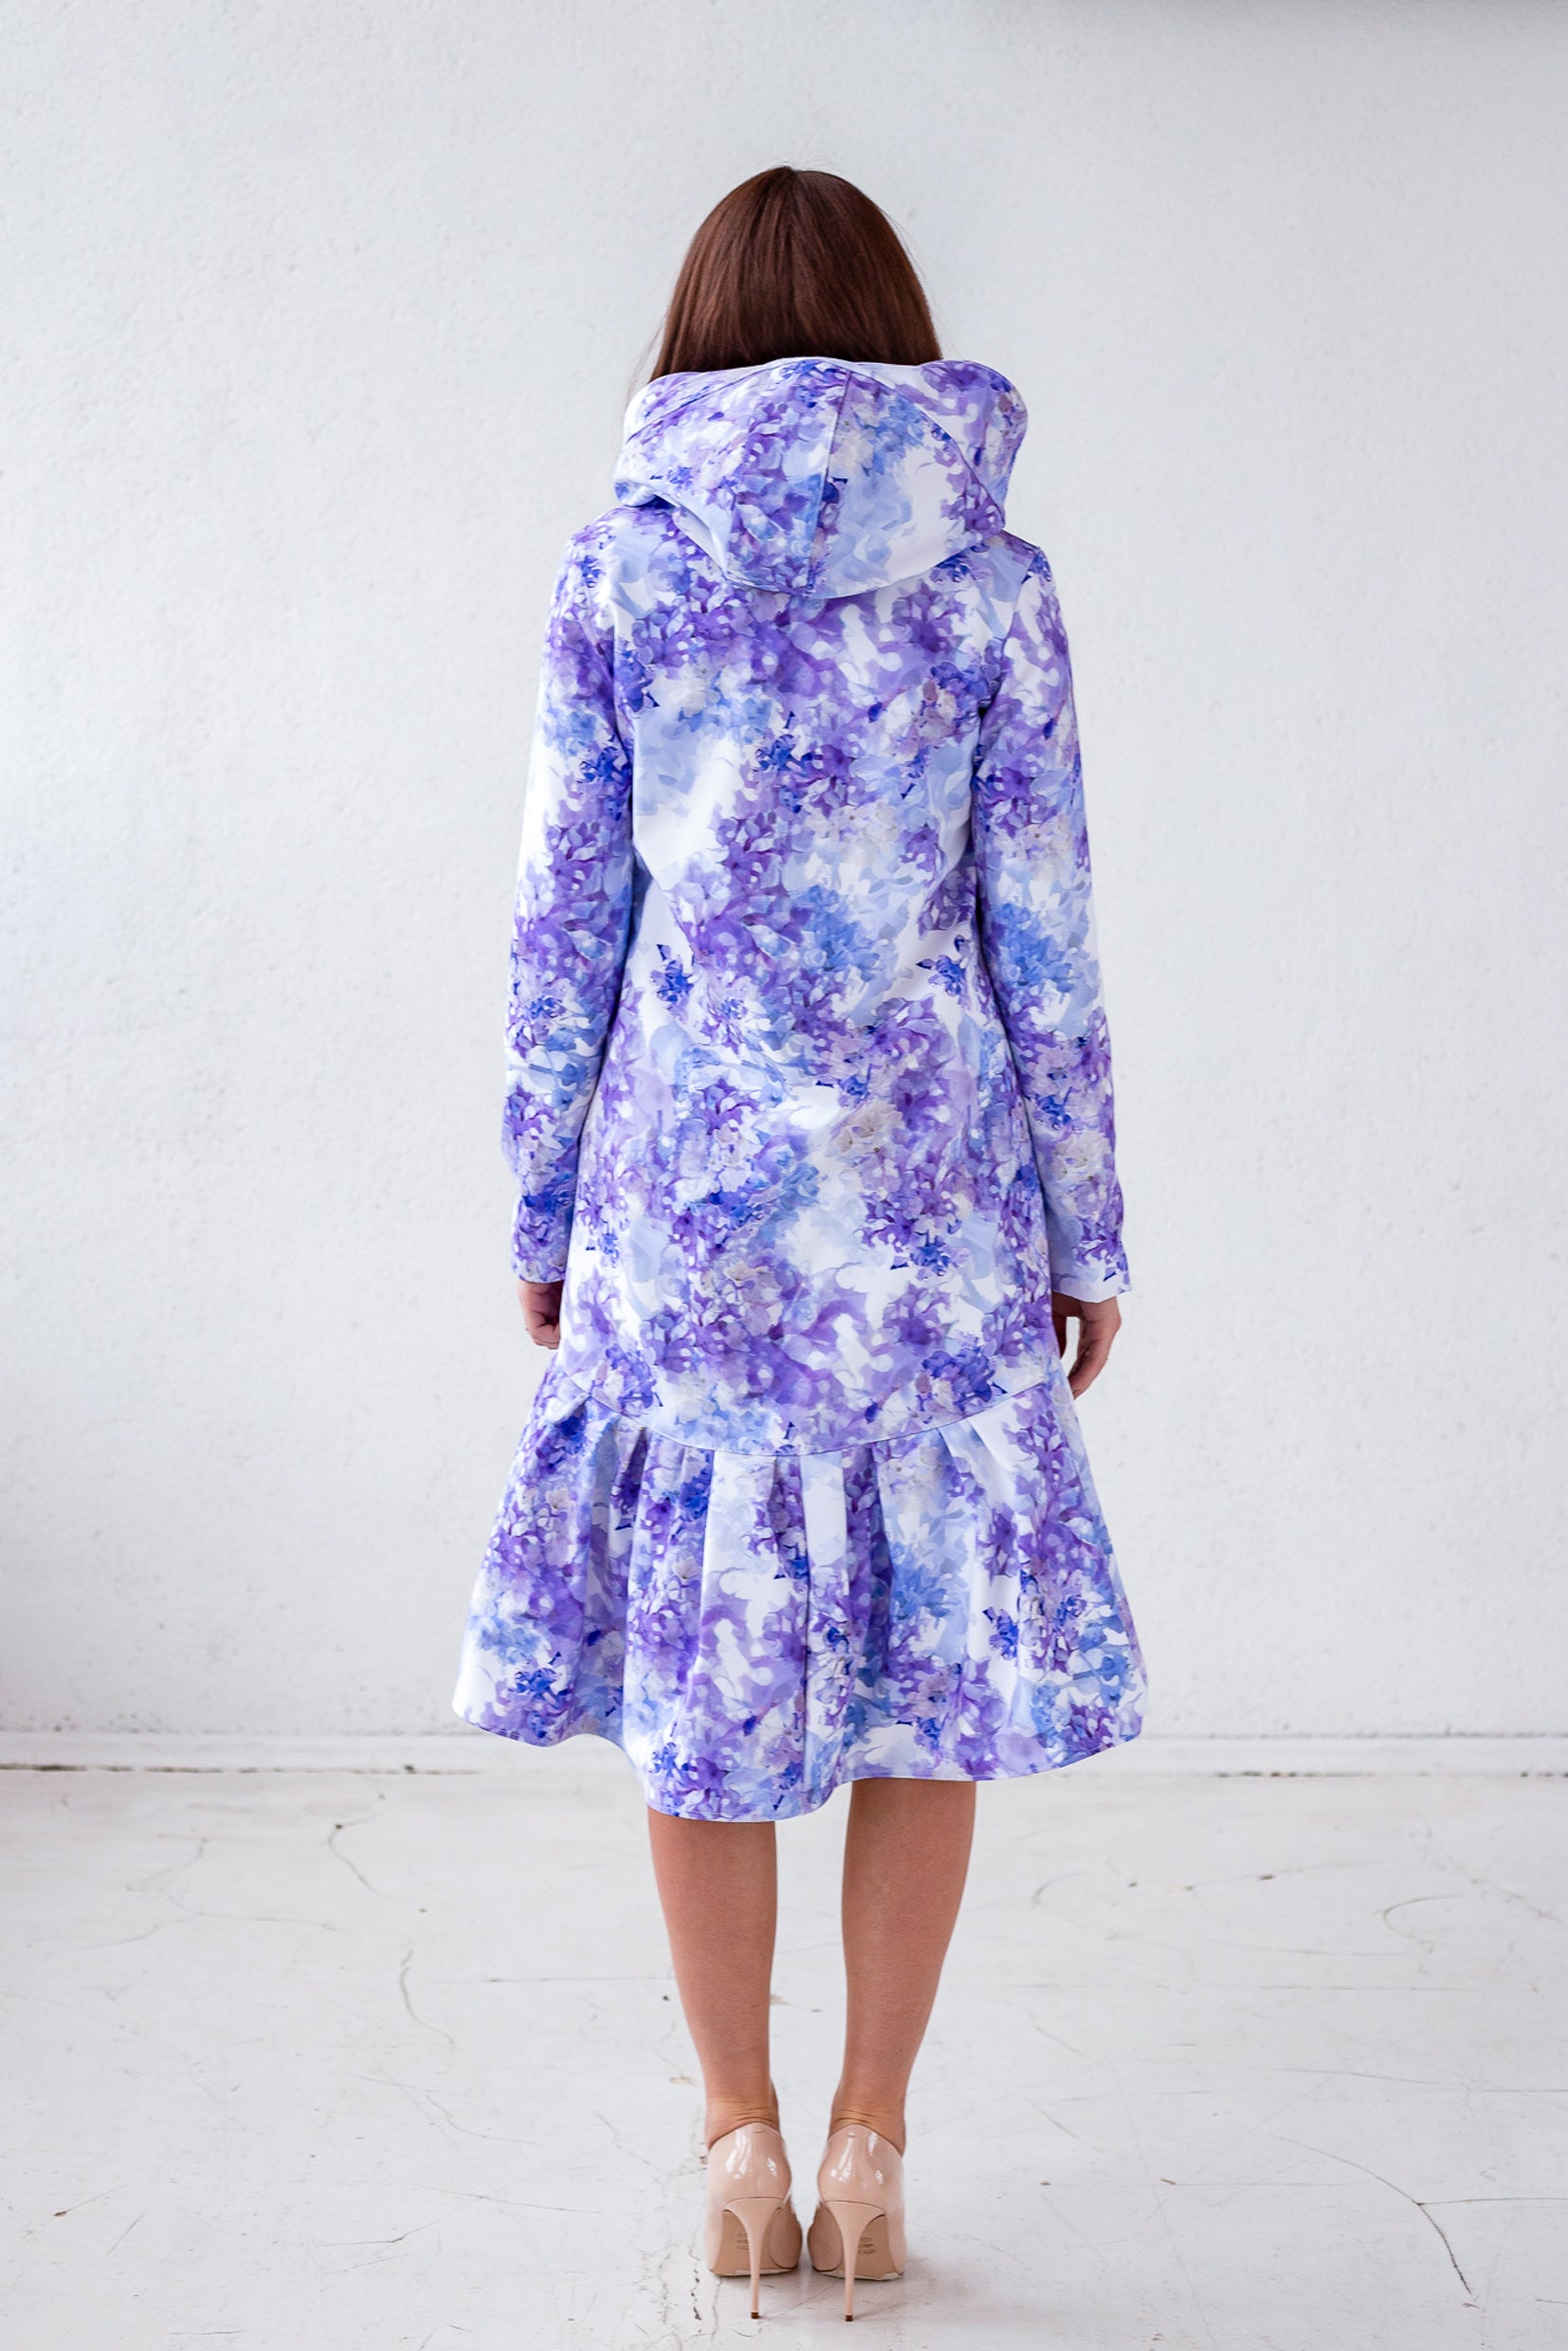 Waterproof Women's Peplum Coat with Hood and blue lilac flower print